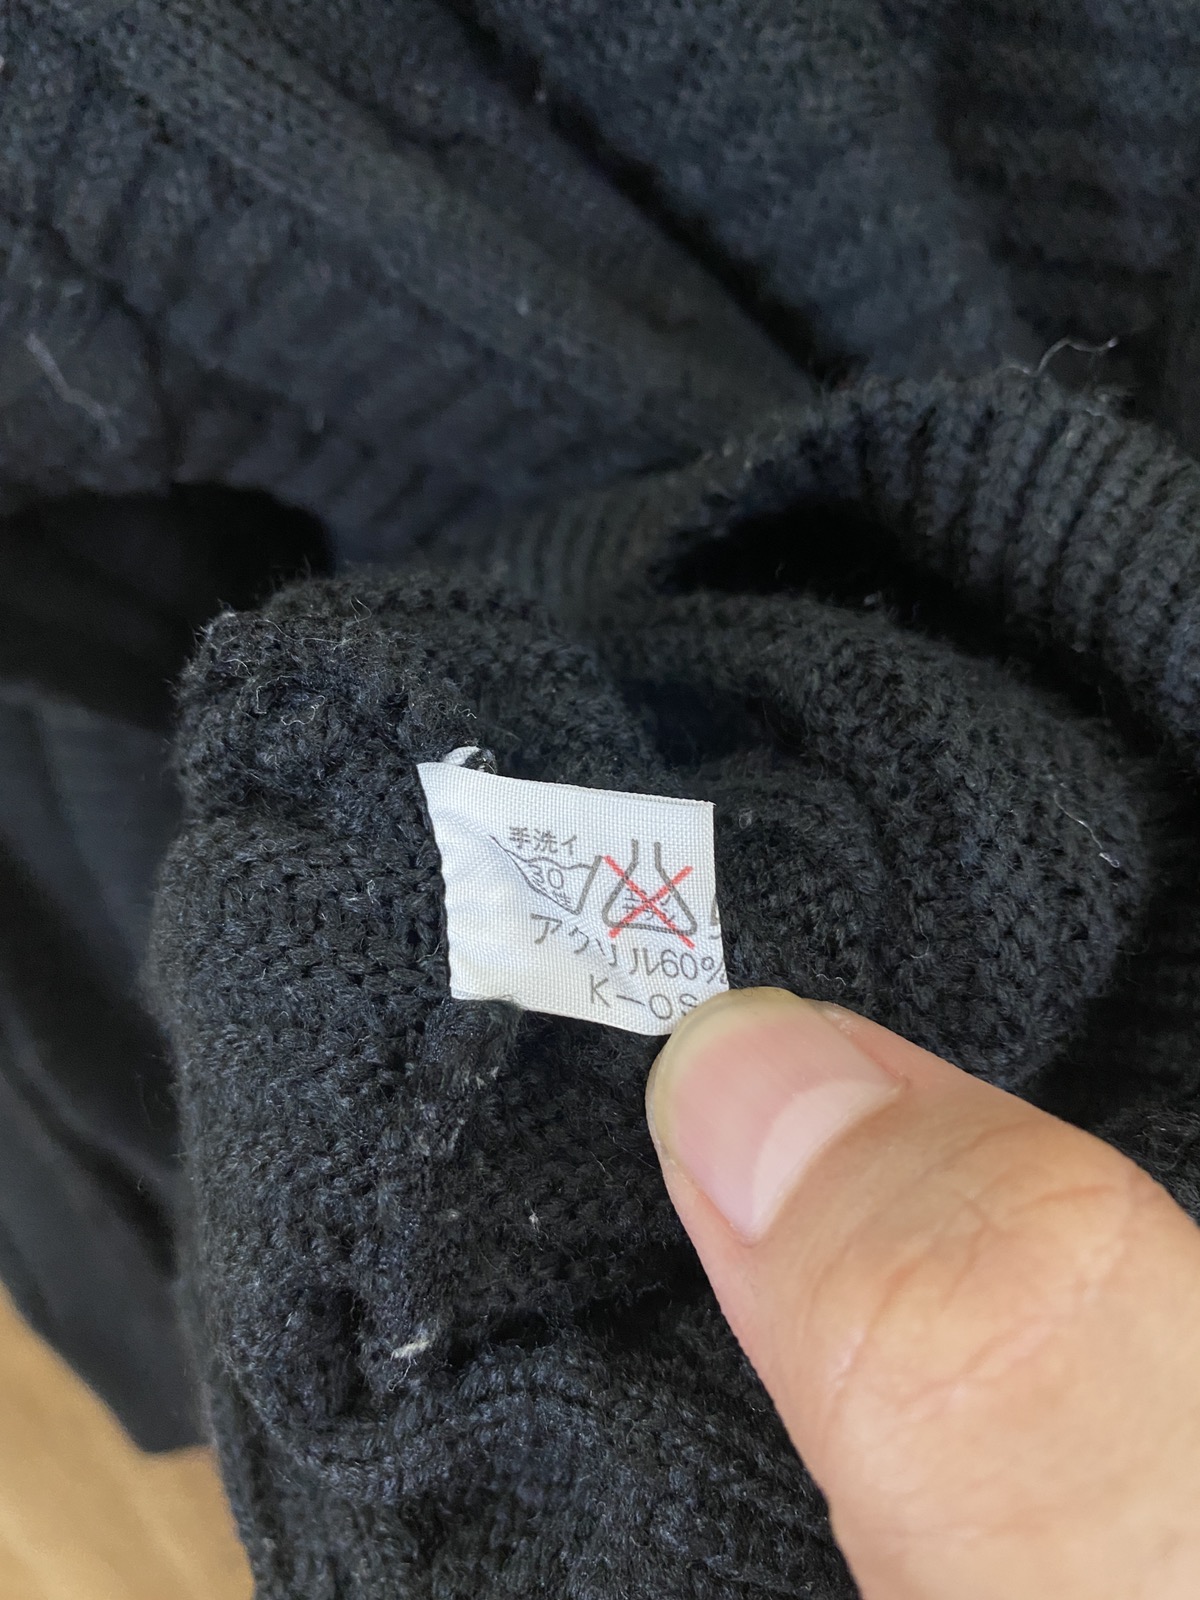 Japanese Brand - Japanese Brand Black Knit Sweaters #1587 - 5